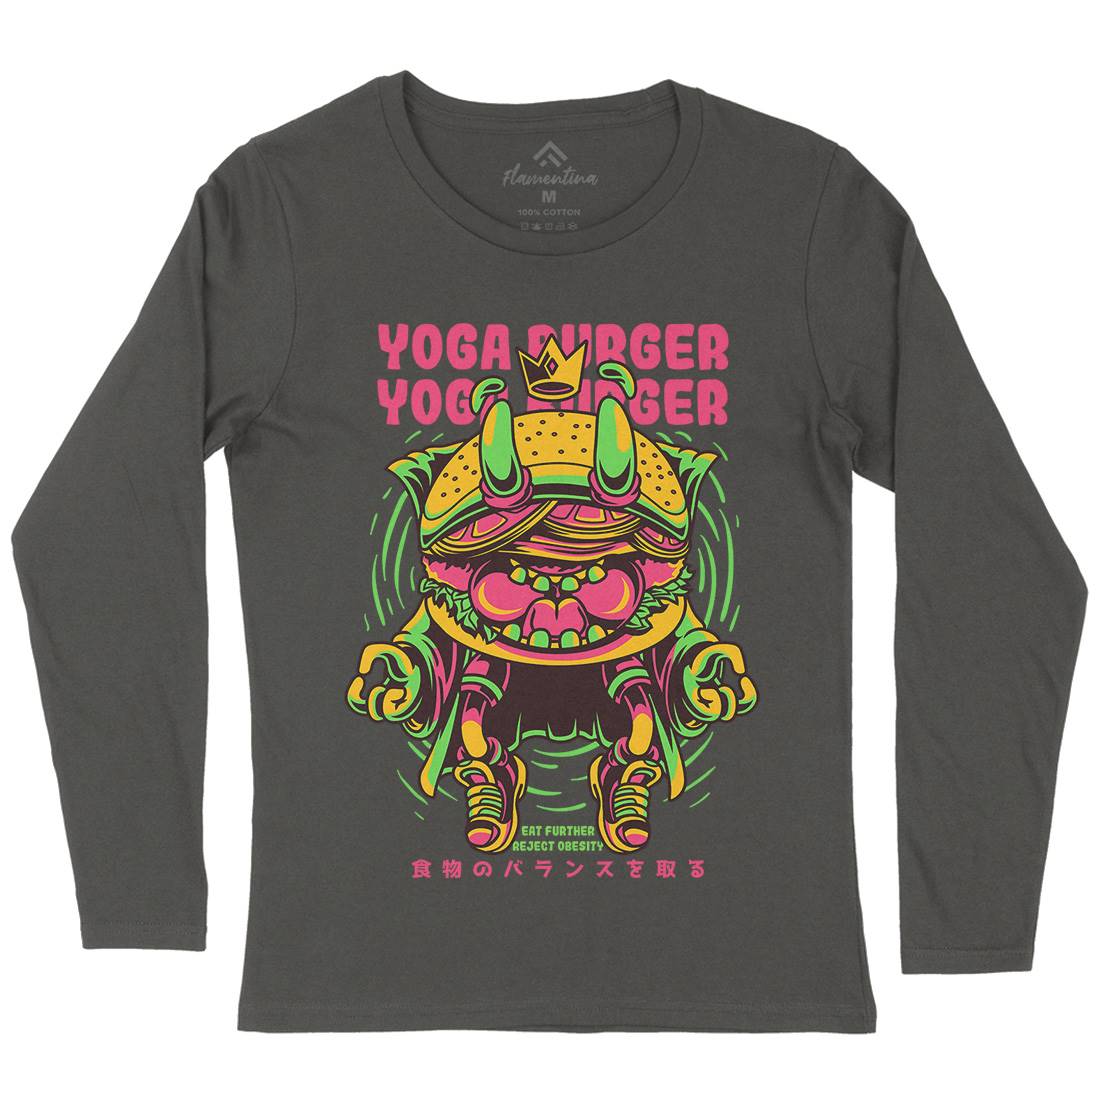 Yoga Burger Womens Long Sleeve T-Shirt Food D892